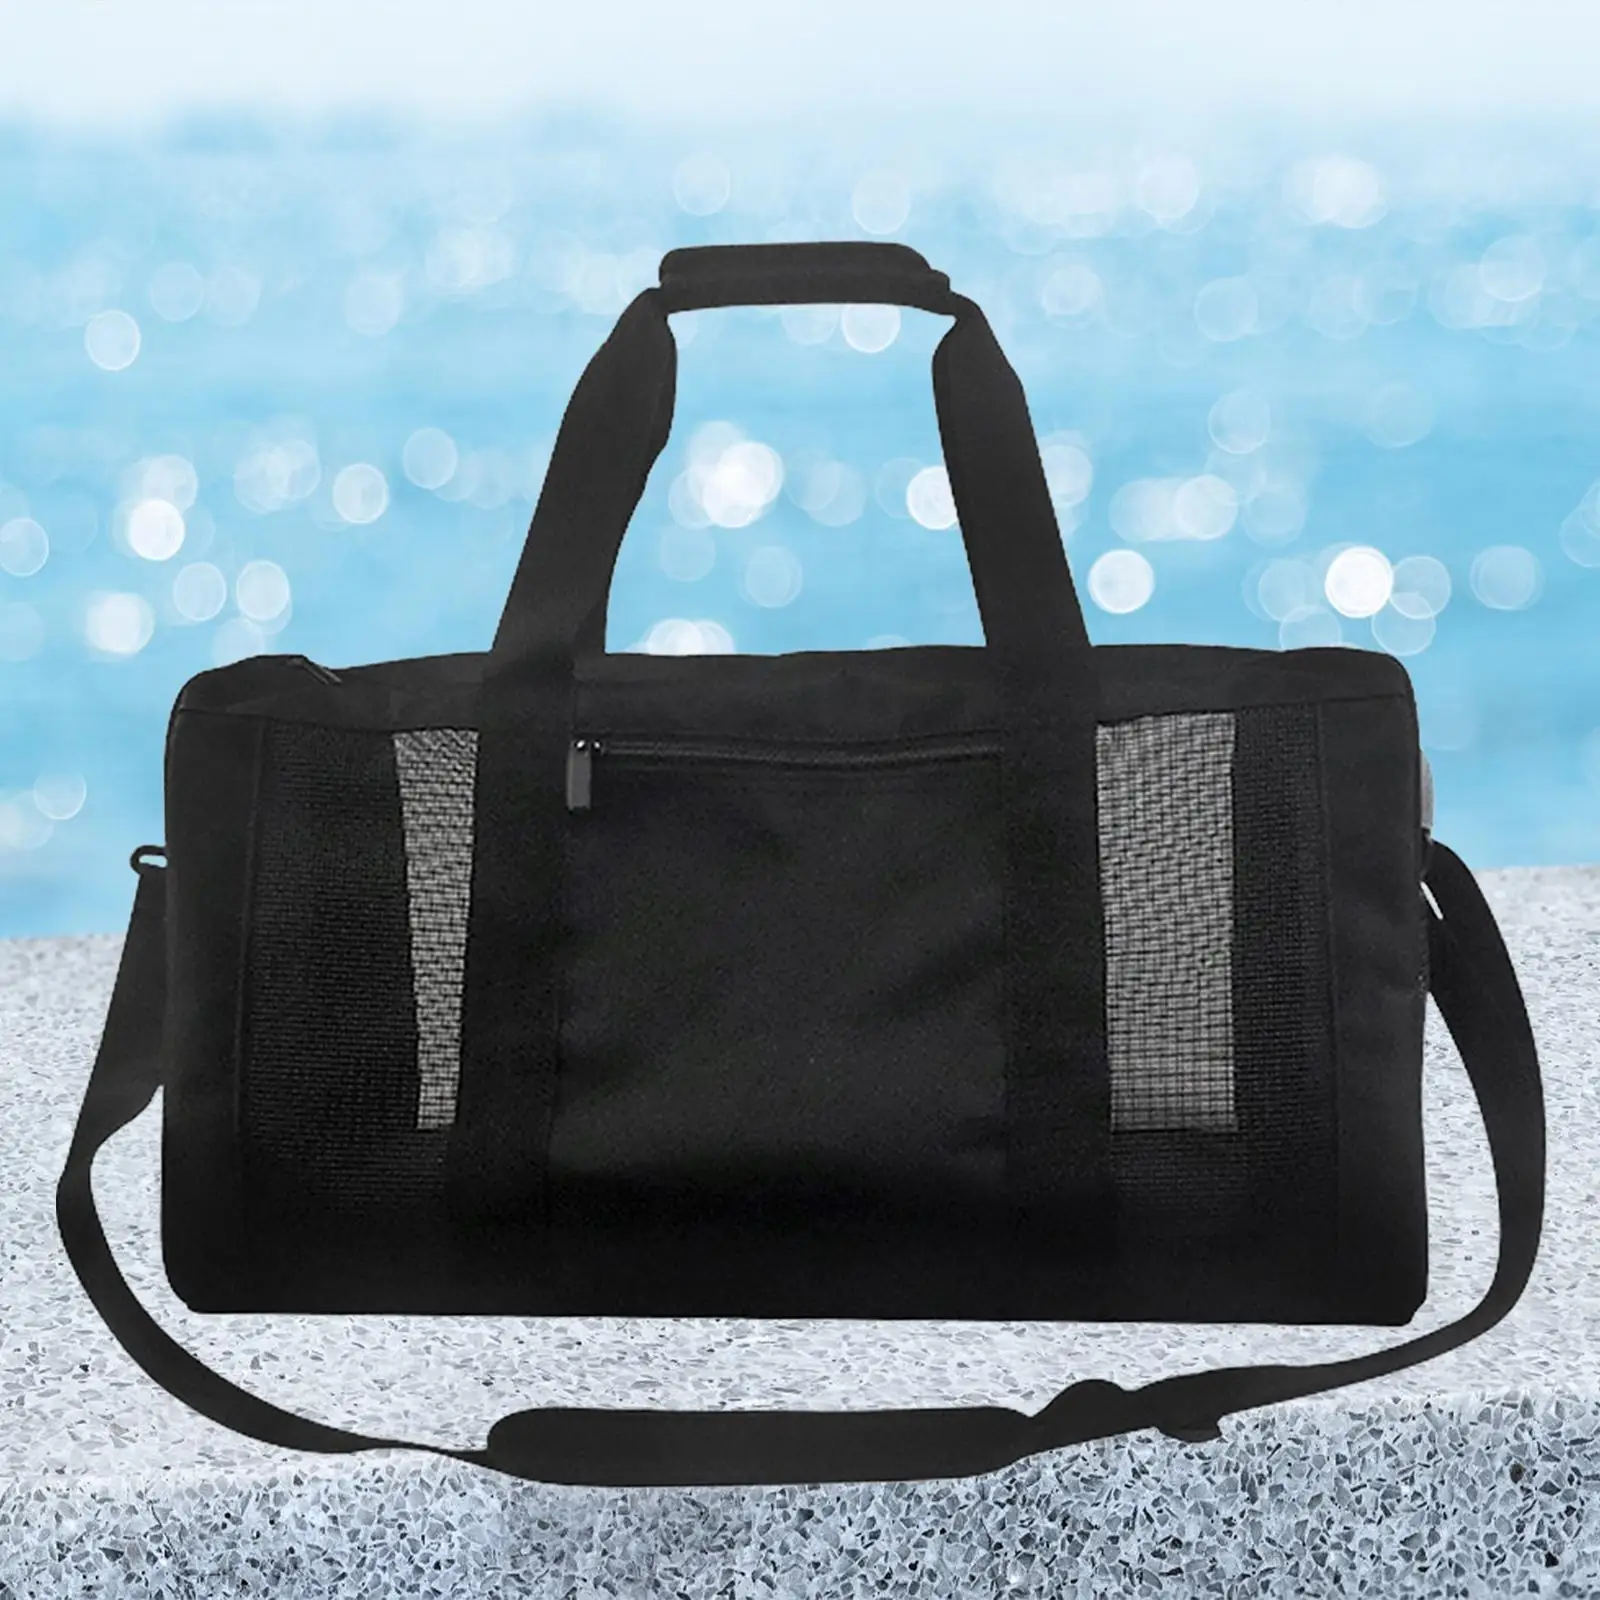 Mesh Gym Bag Travel Detachable Strap Travel Duffle Bag Overnight Weekender Bag Zipper Closure Hiking Sports Gym Bag Exercise Bag